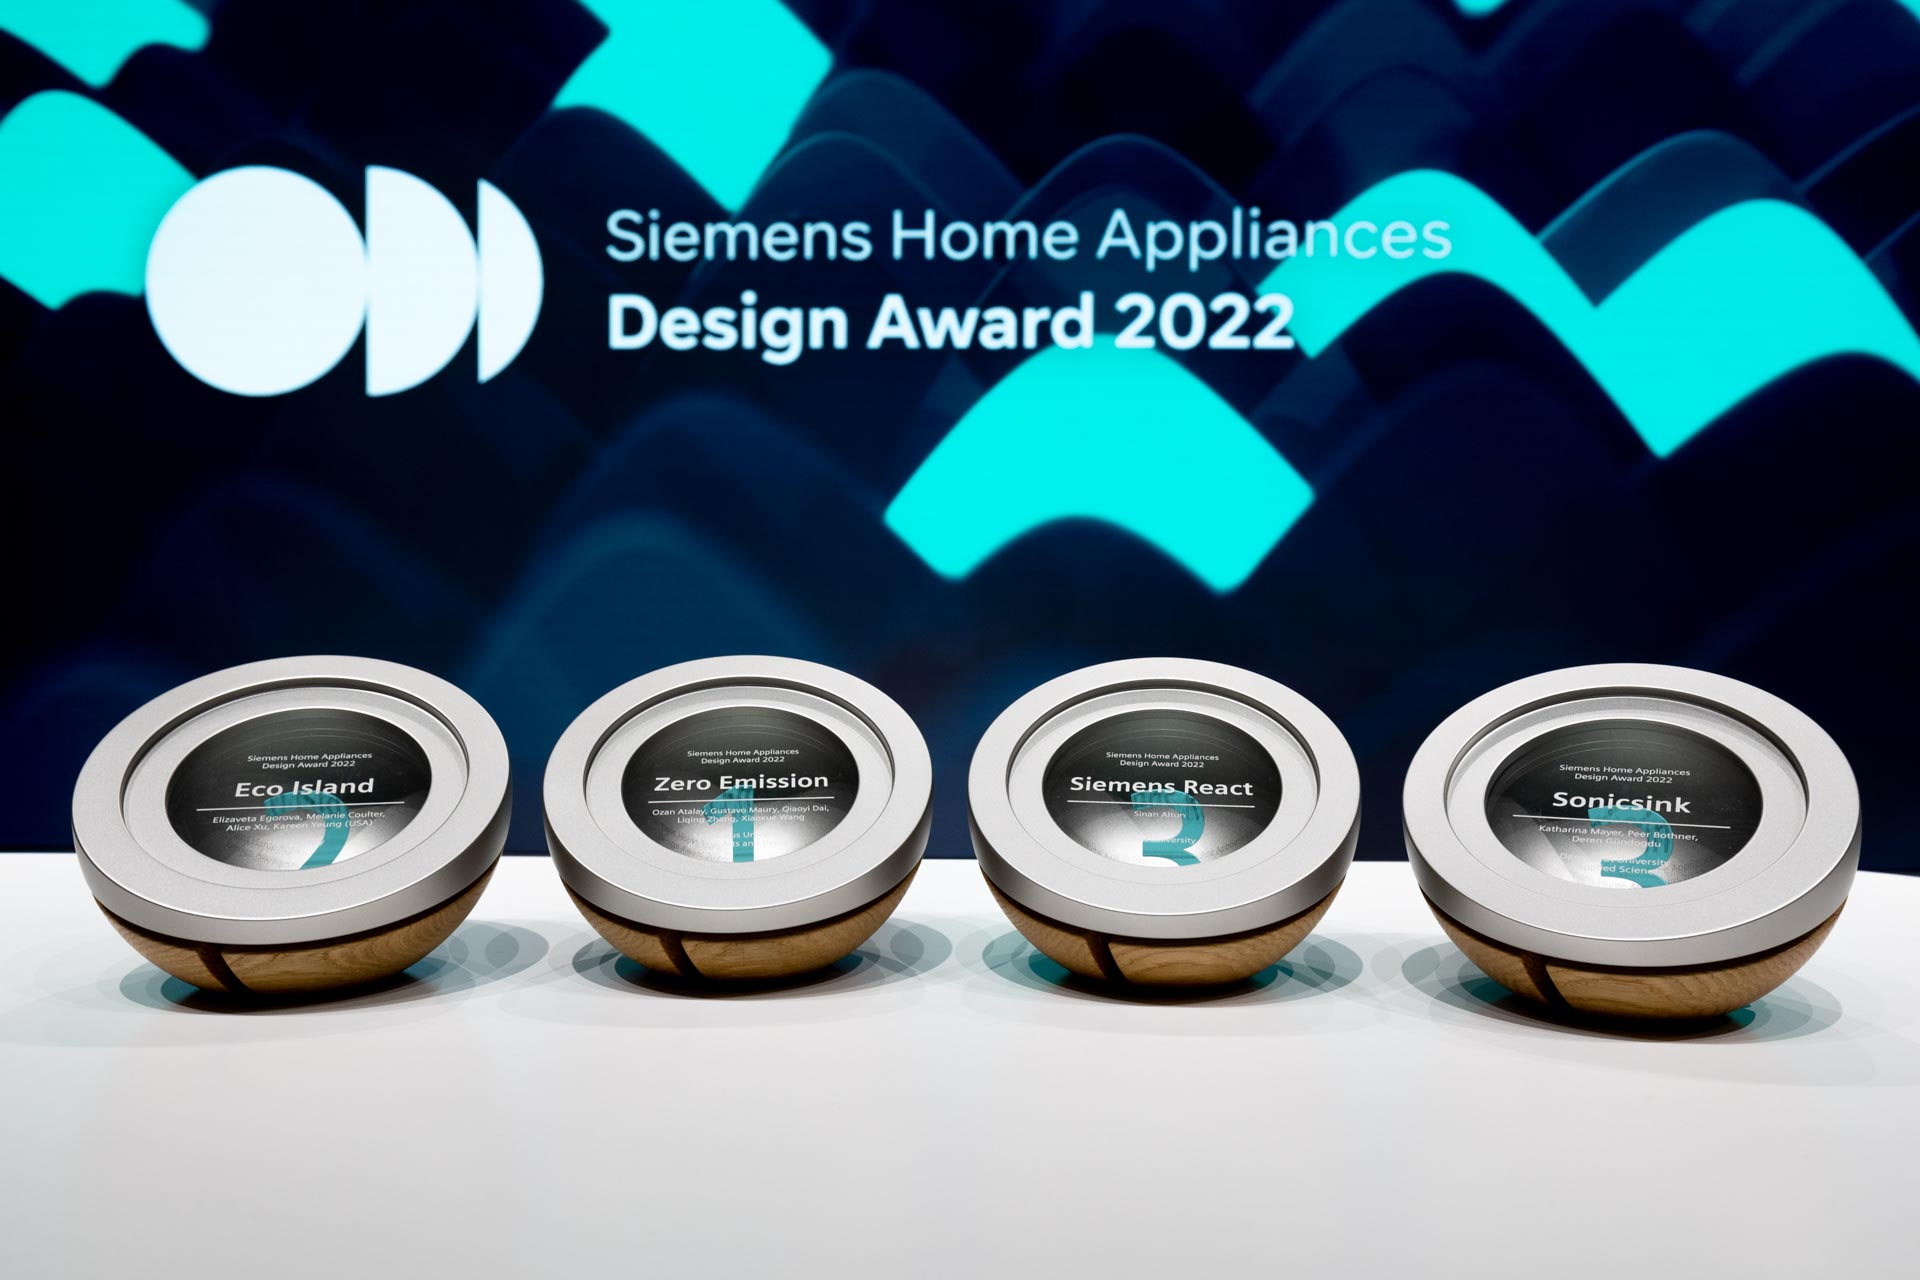 Siemens Home Appliances Design Award